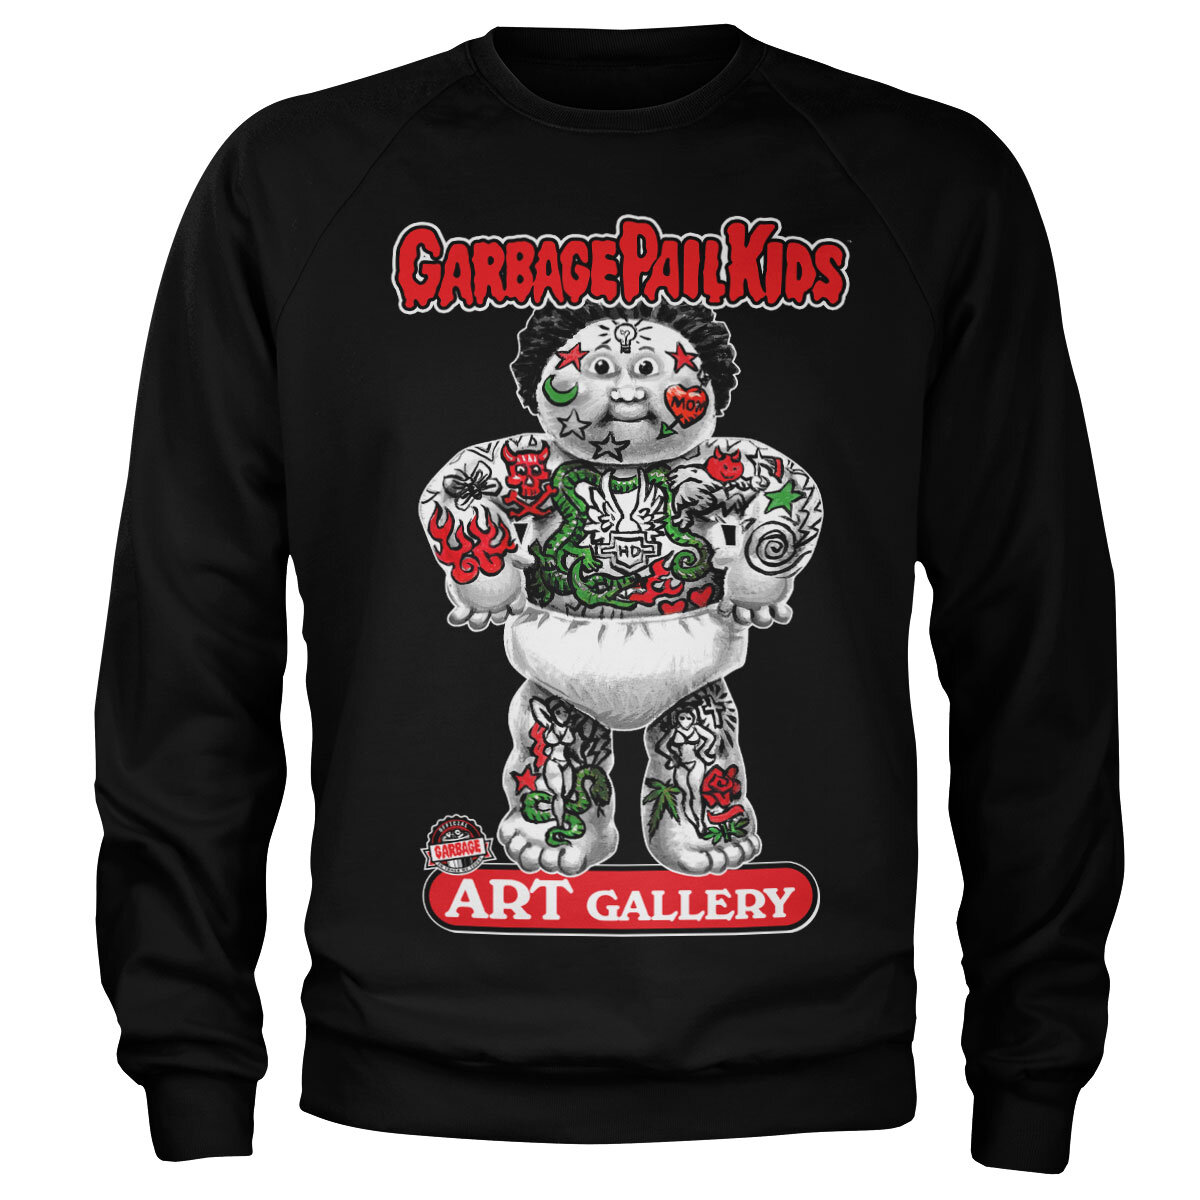 Art Gallery Sweatshirt